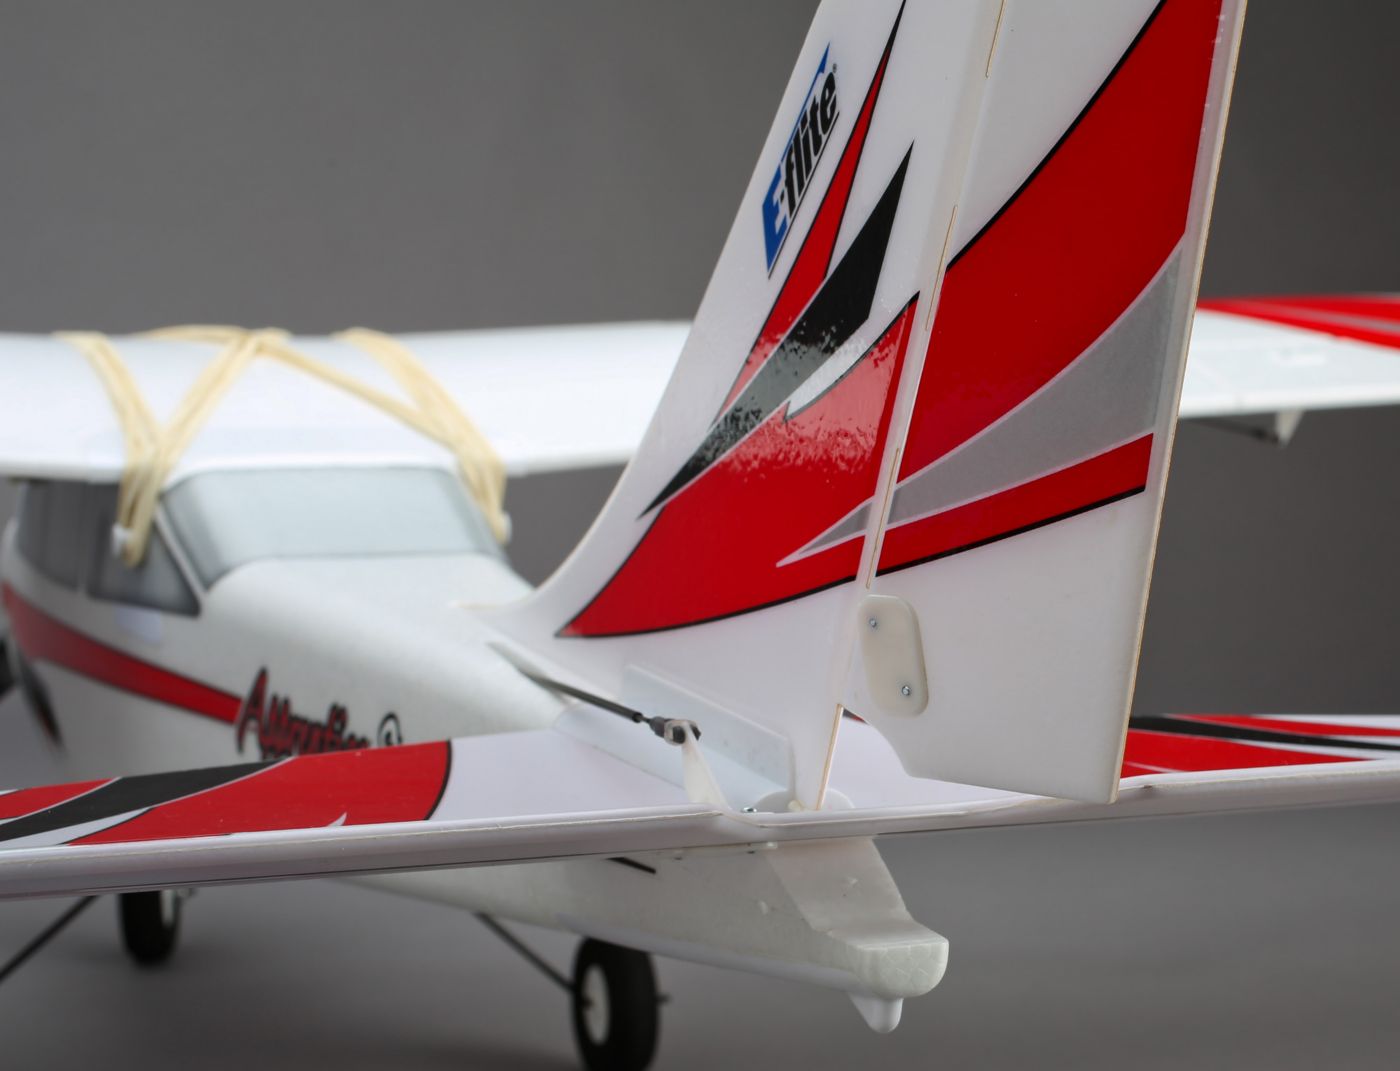 apprentice model airplane